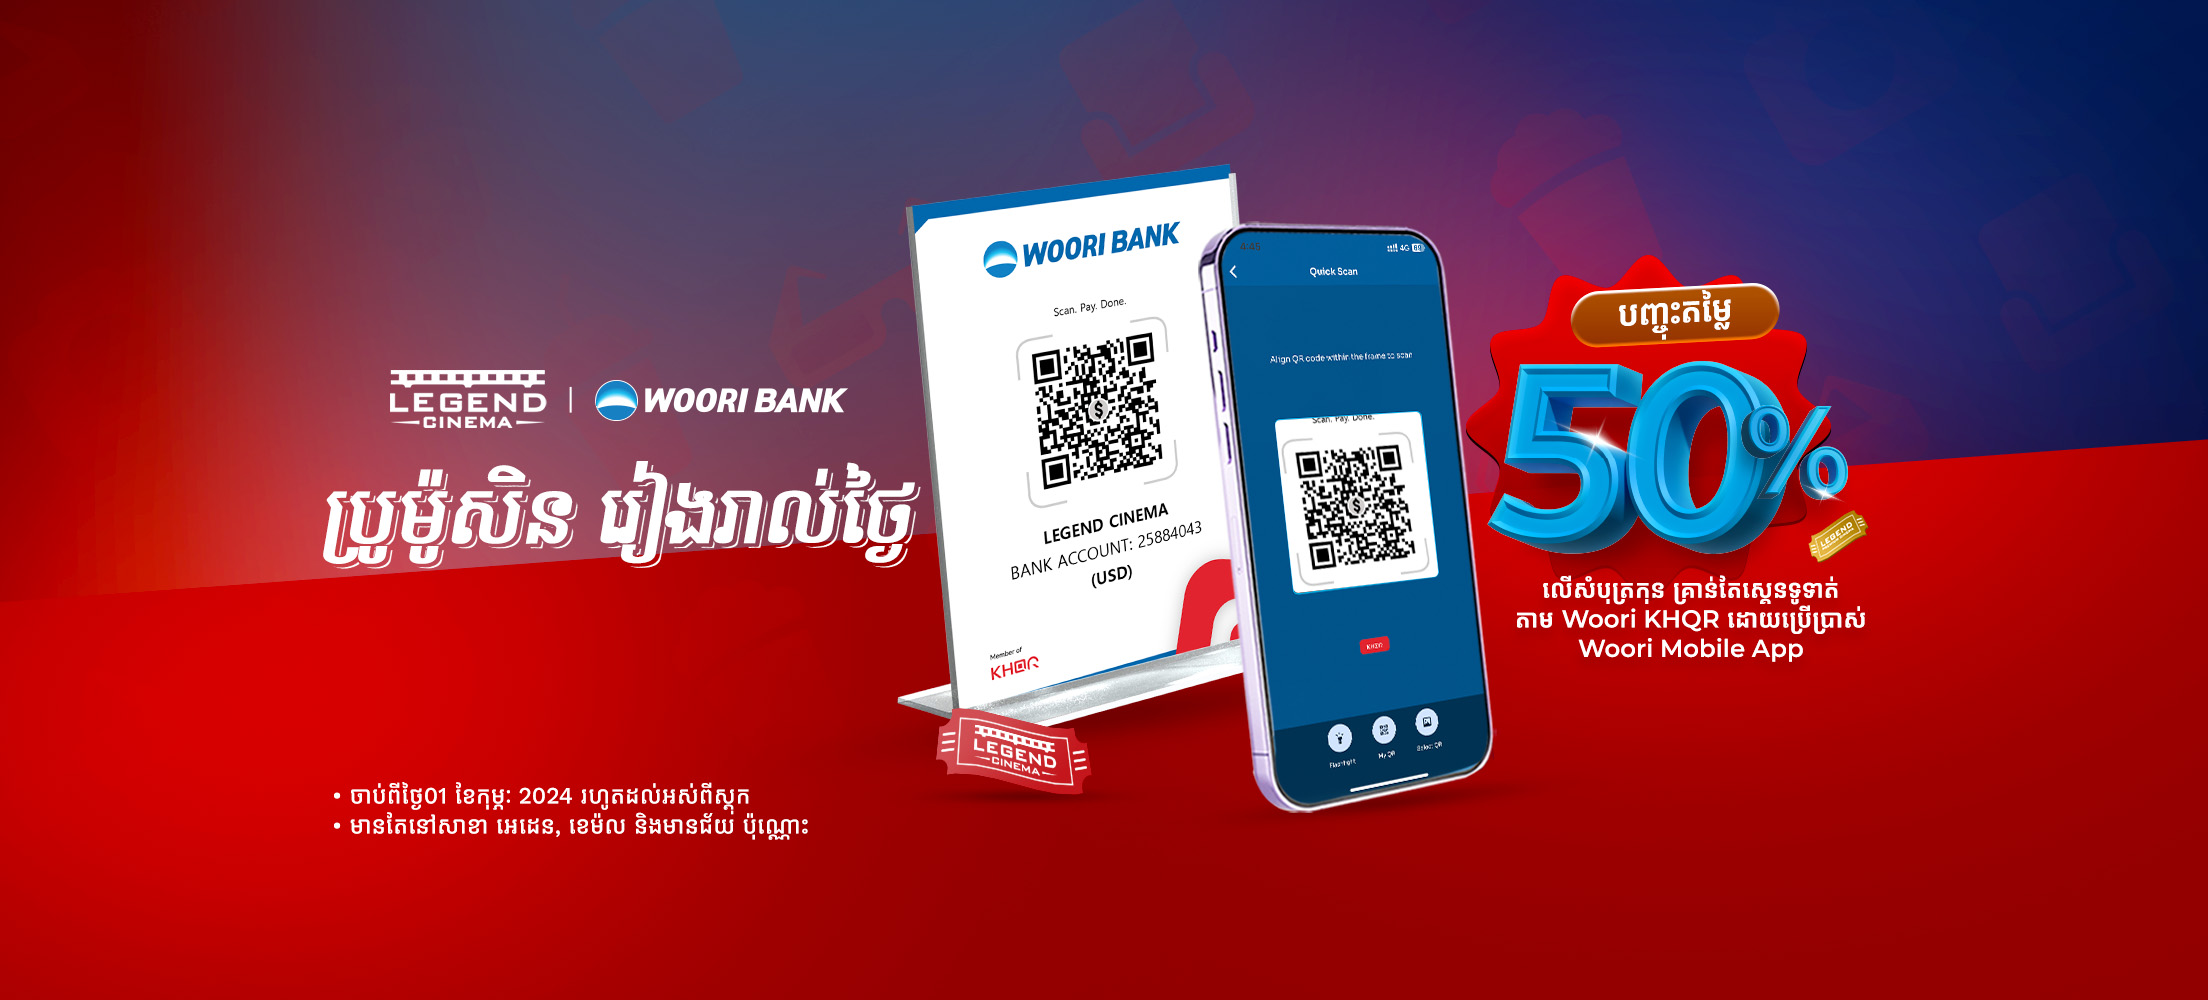 Woori Bank Promotion(Web Banner).jpg